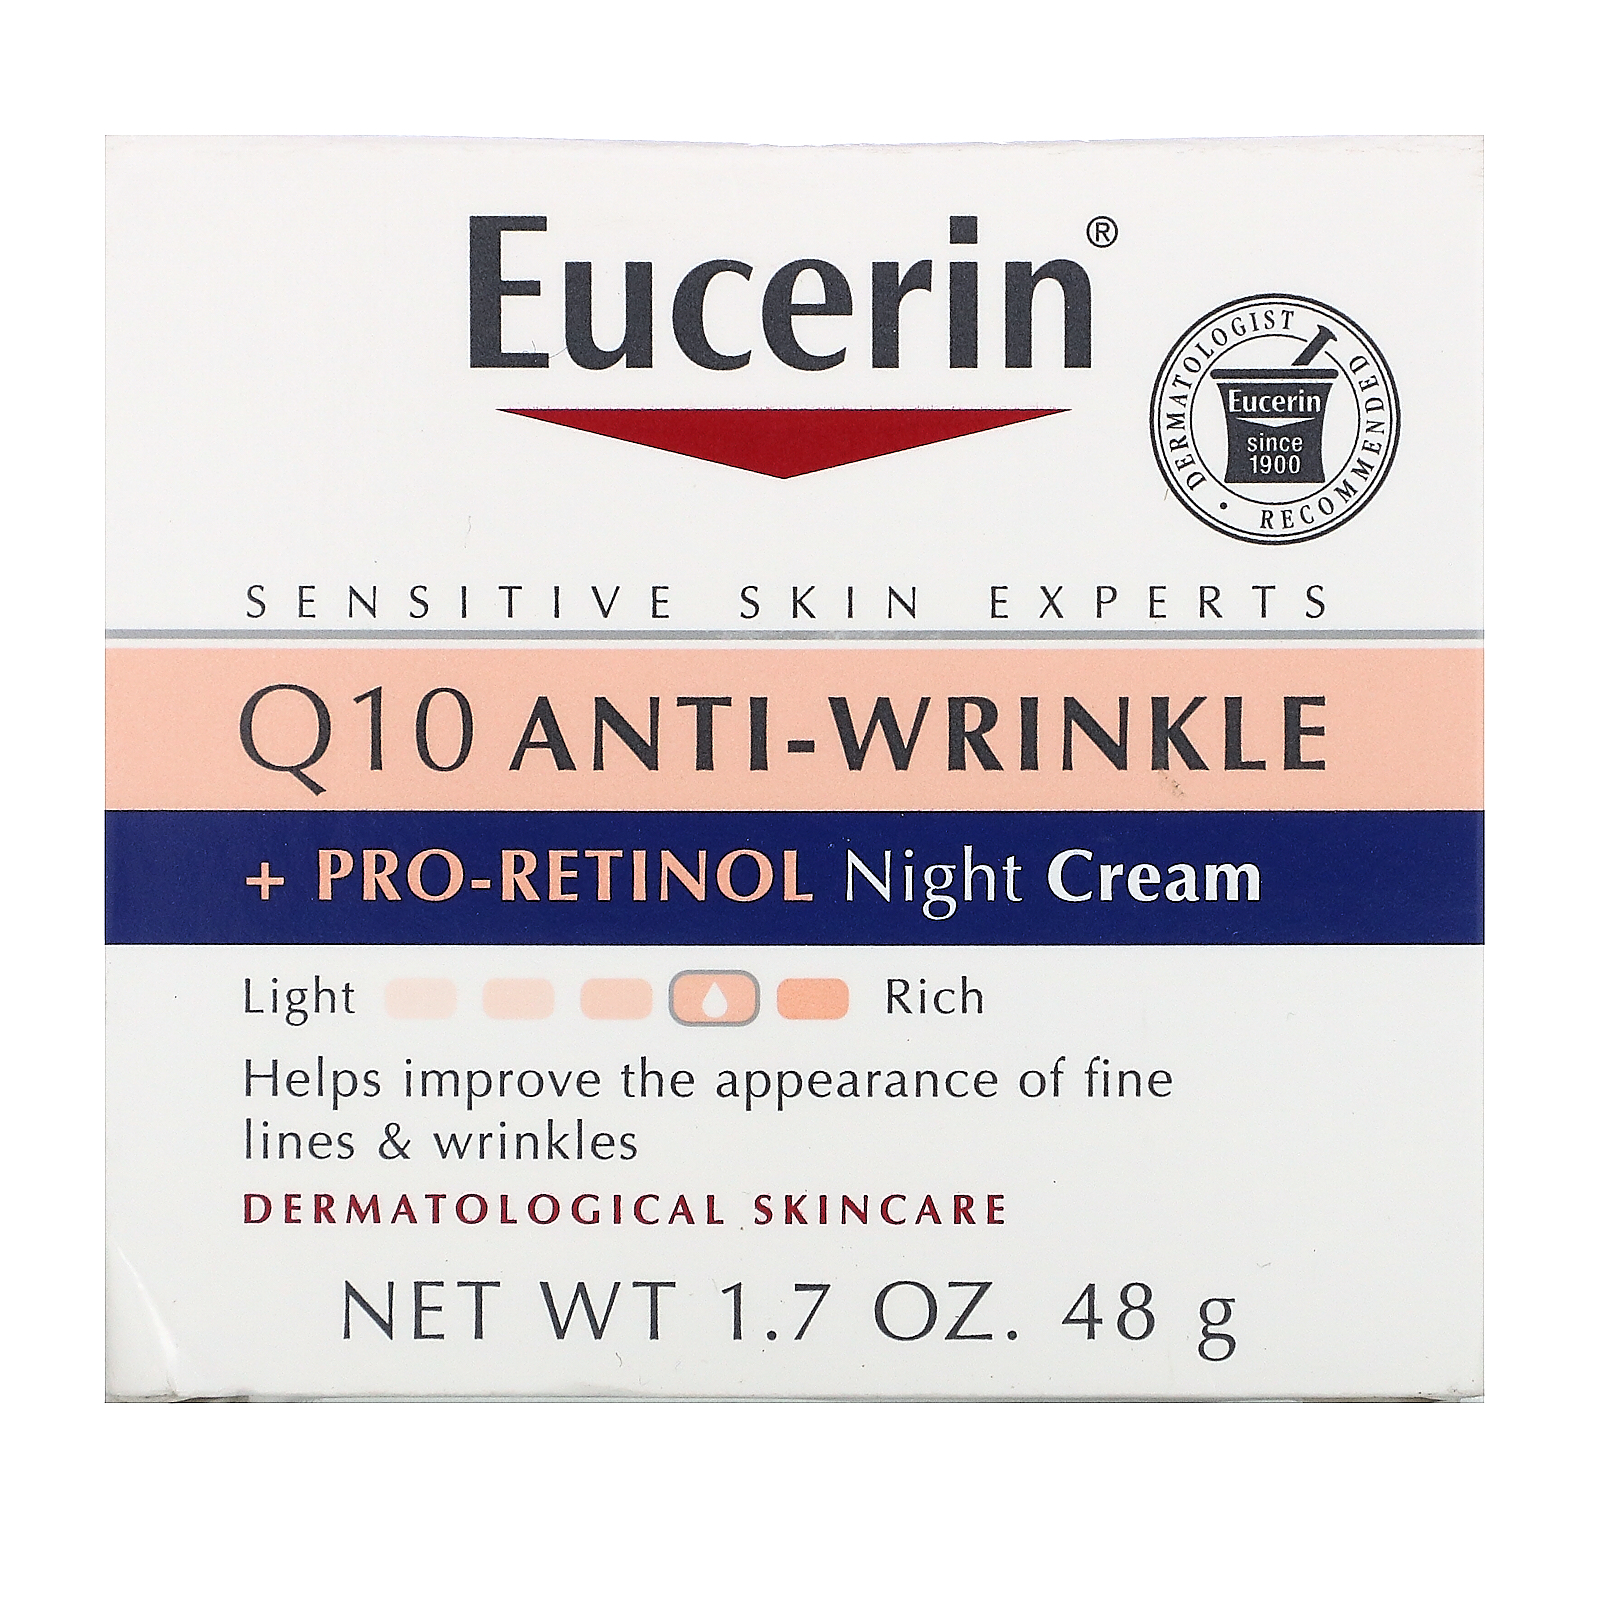 q10 anti wrinkle pro retinol night cream legkelendőbb anti aging arckrém